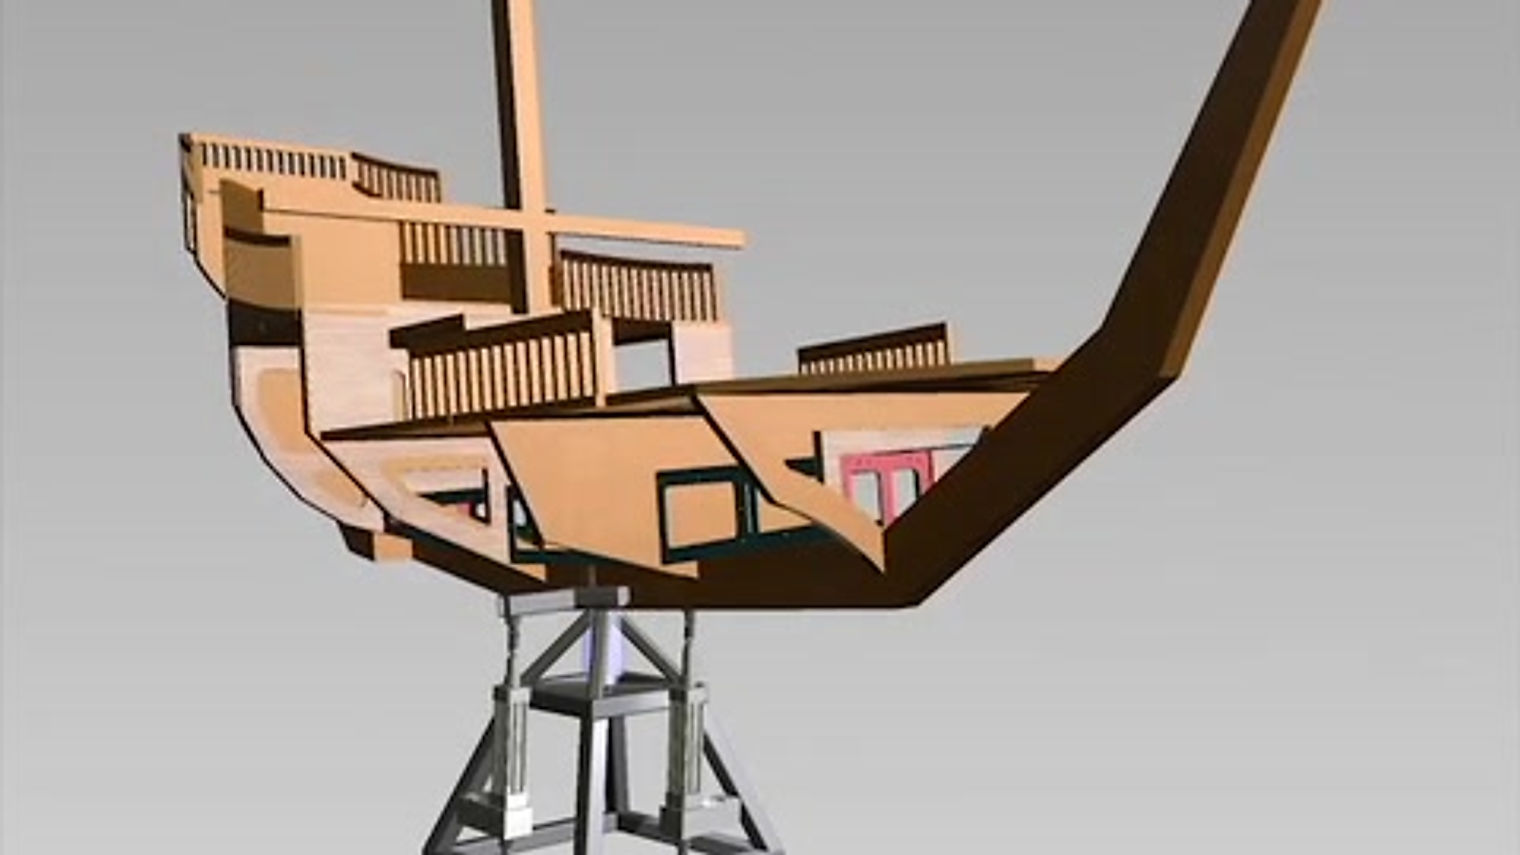 Kubo Boat "Duopod" design